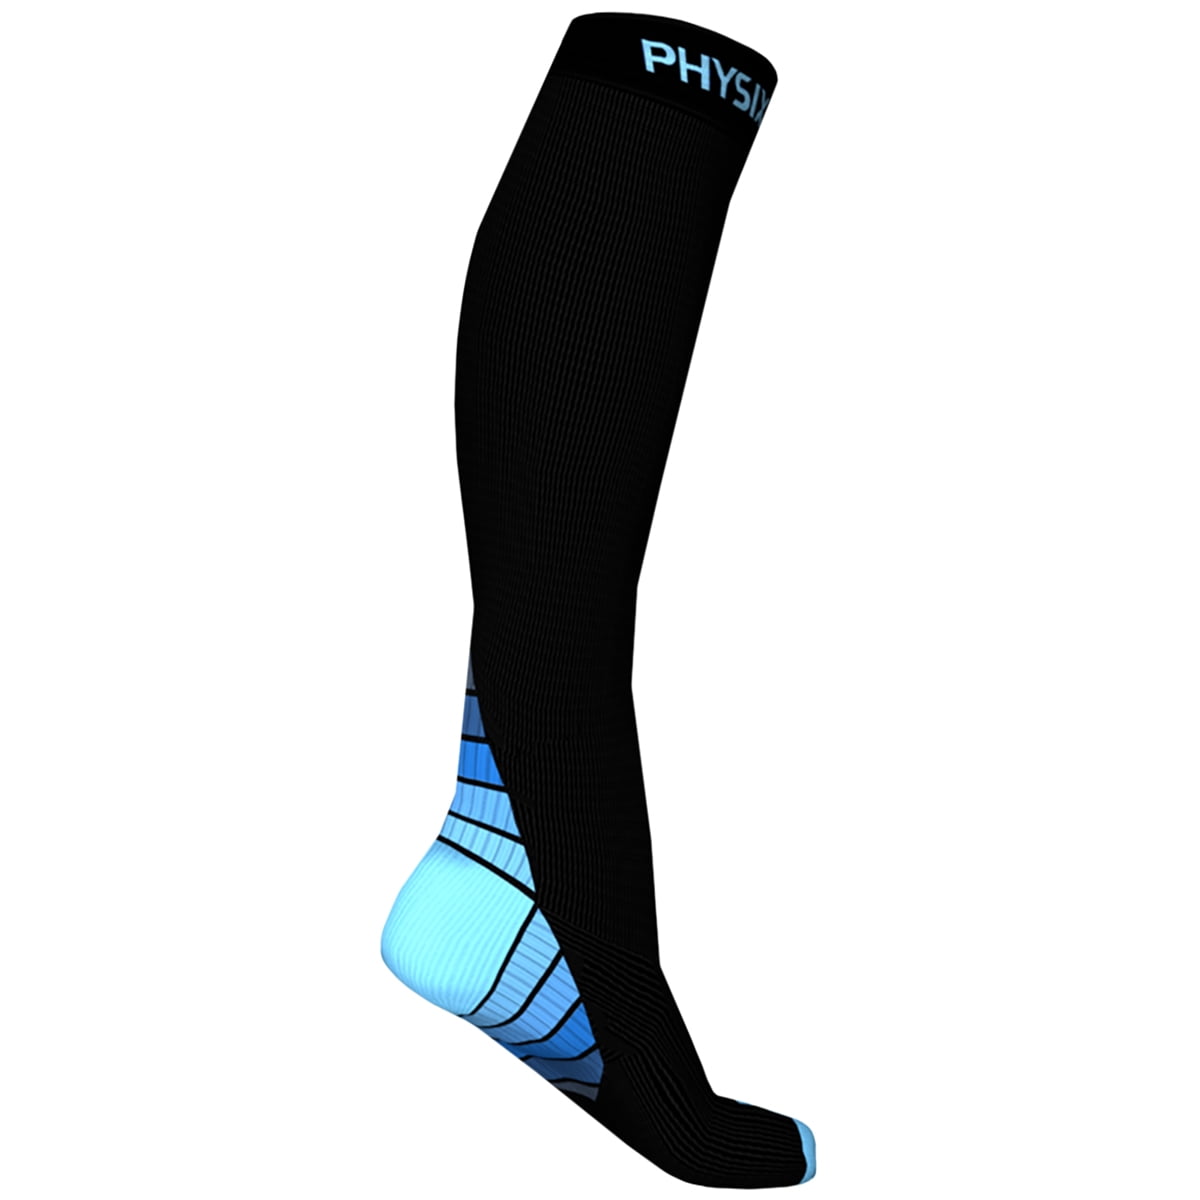 Physix Gear Compression Socks Size Chart